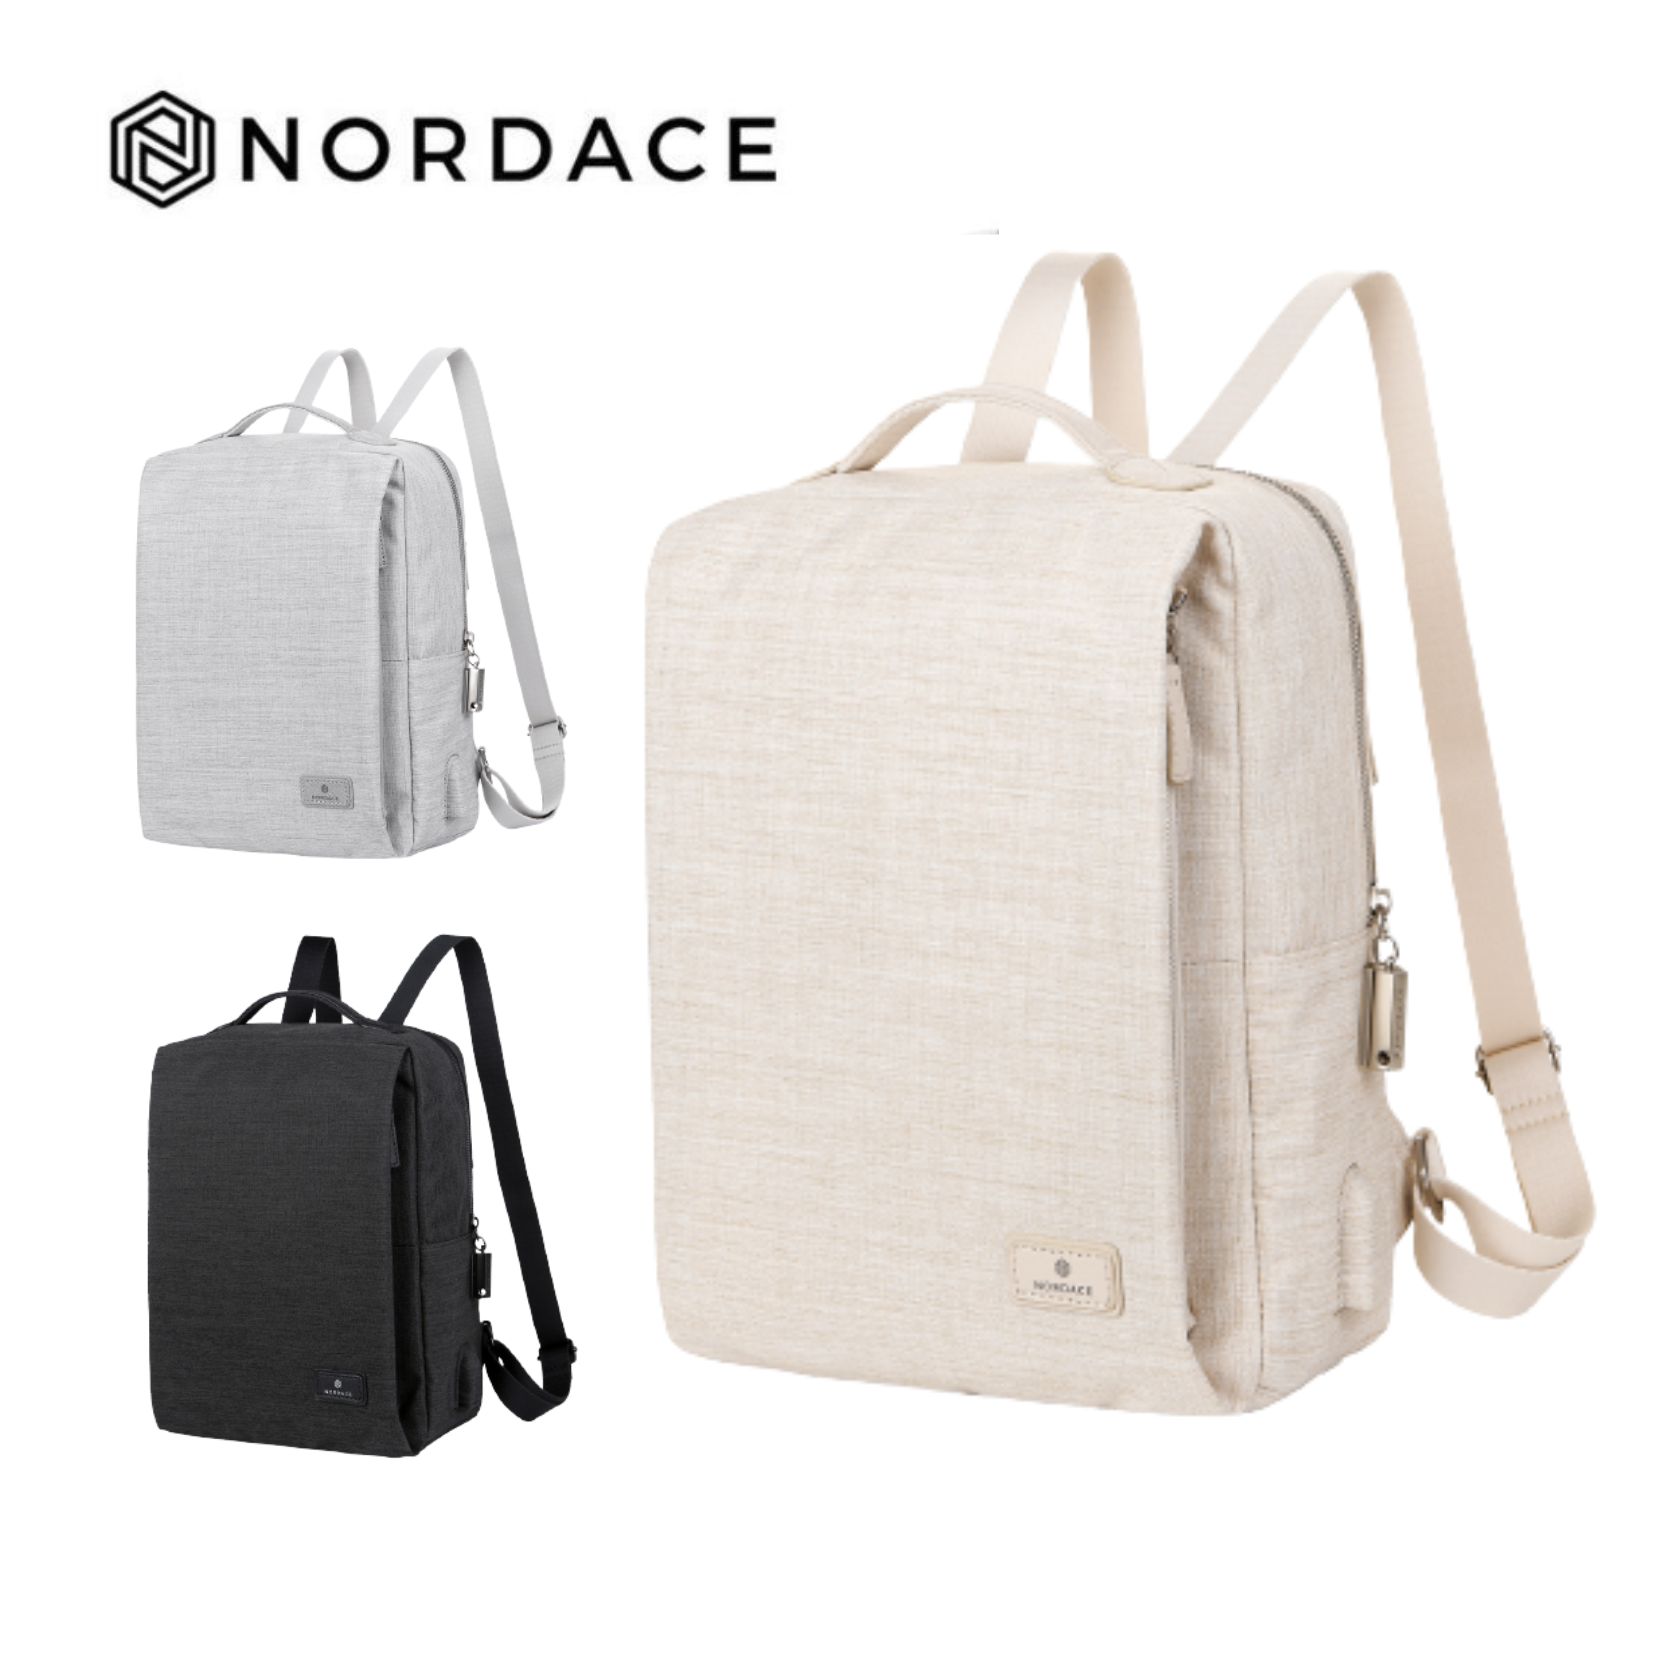 Nordace Siena II 迷你背包 充電雙肩包 電腦包 旅行包 後背包 輕便-3色可選 米色